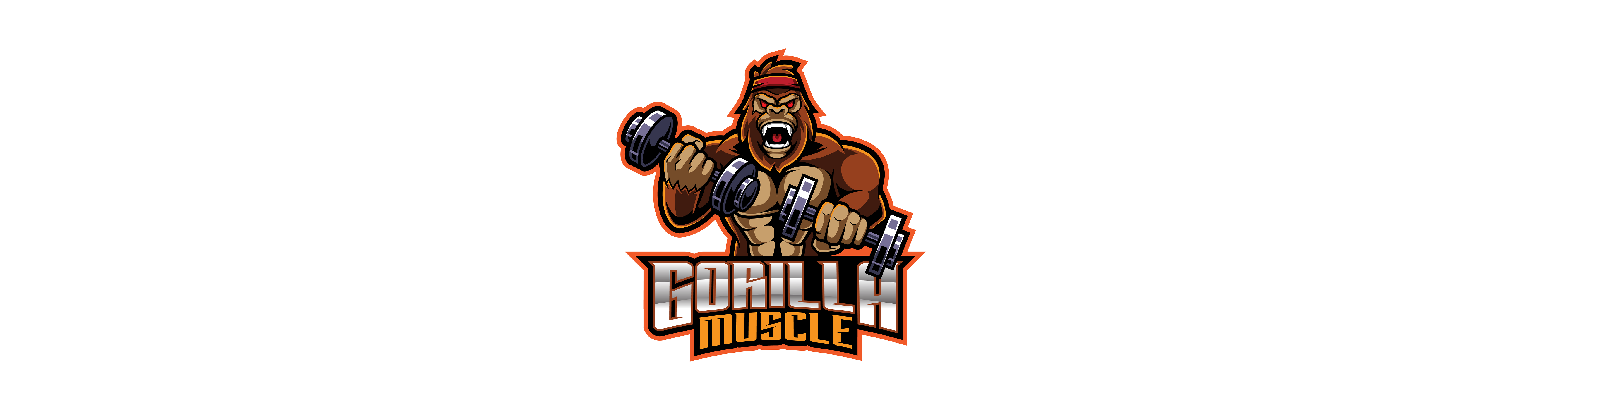 Gorilla Muscle é confiável? Vale a pena comprar? Opinião